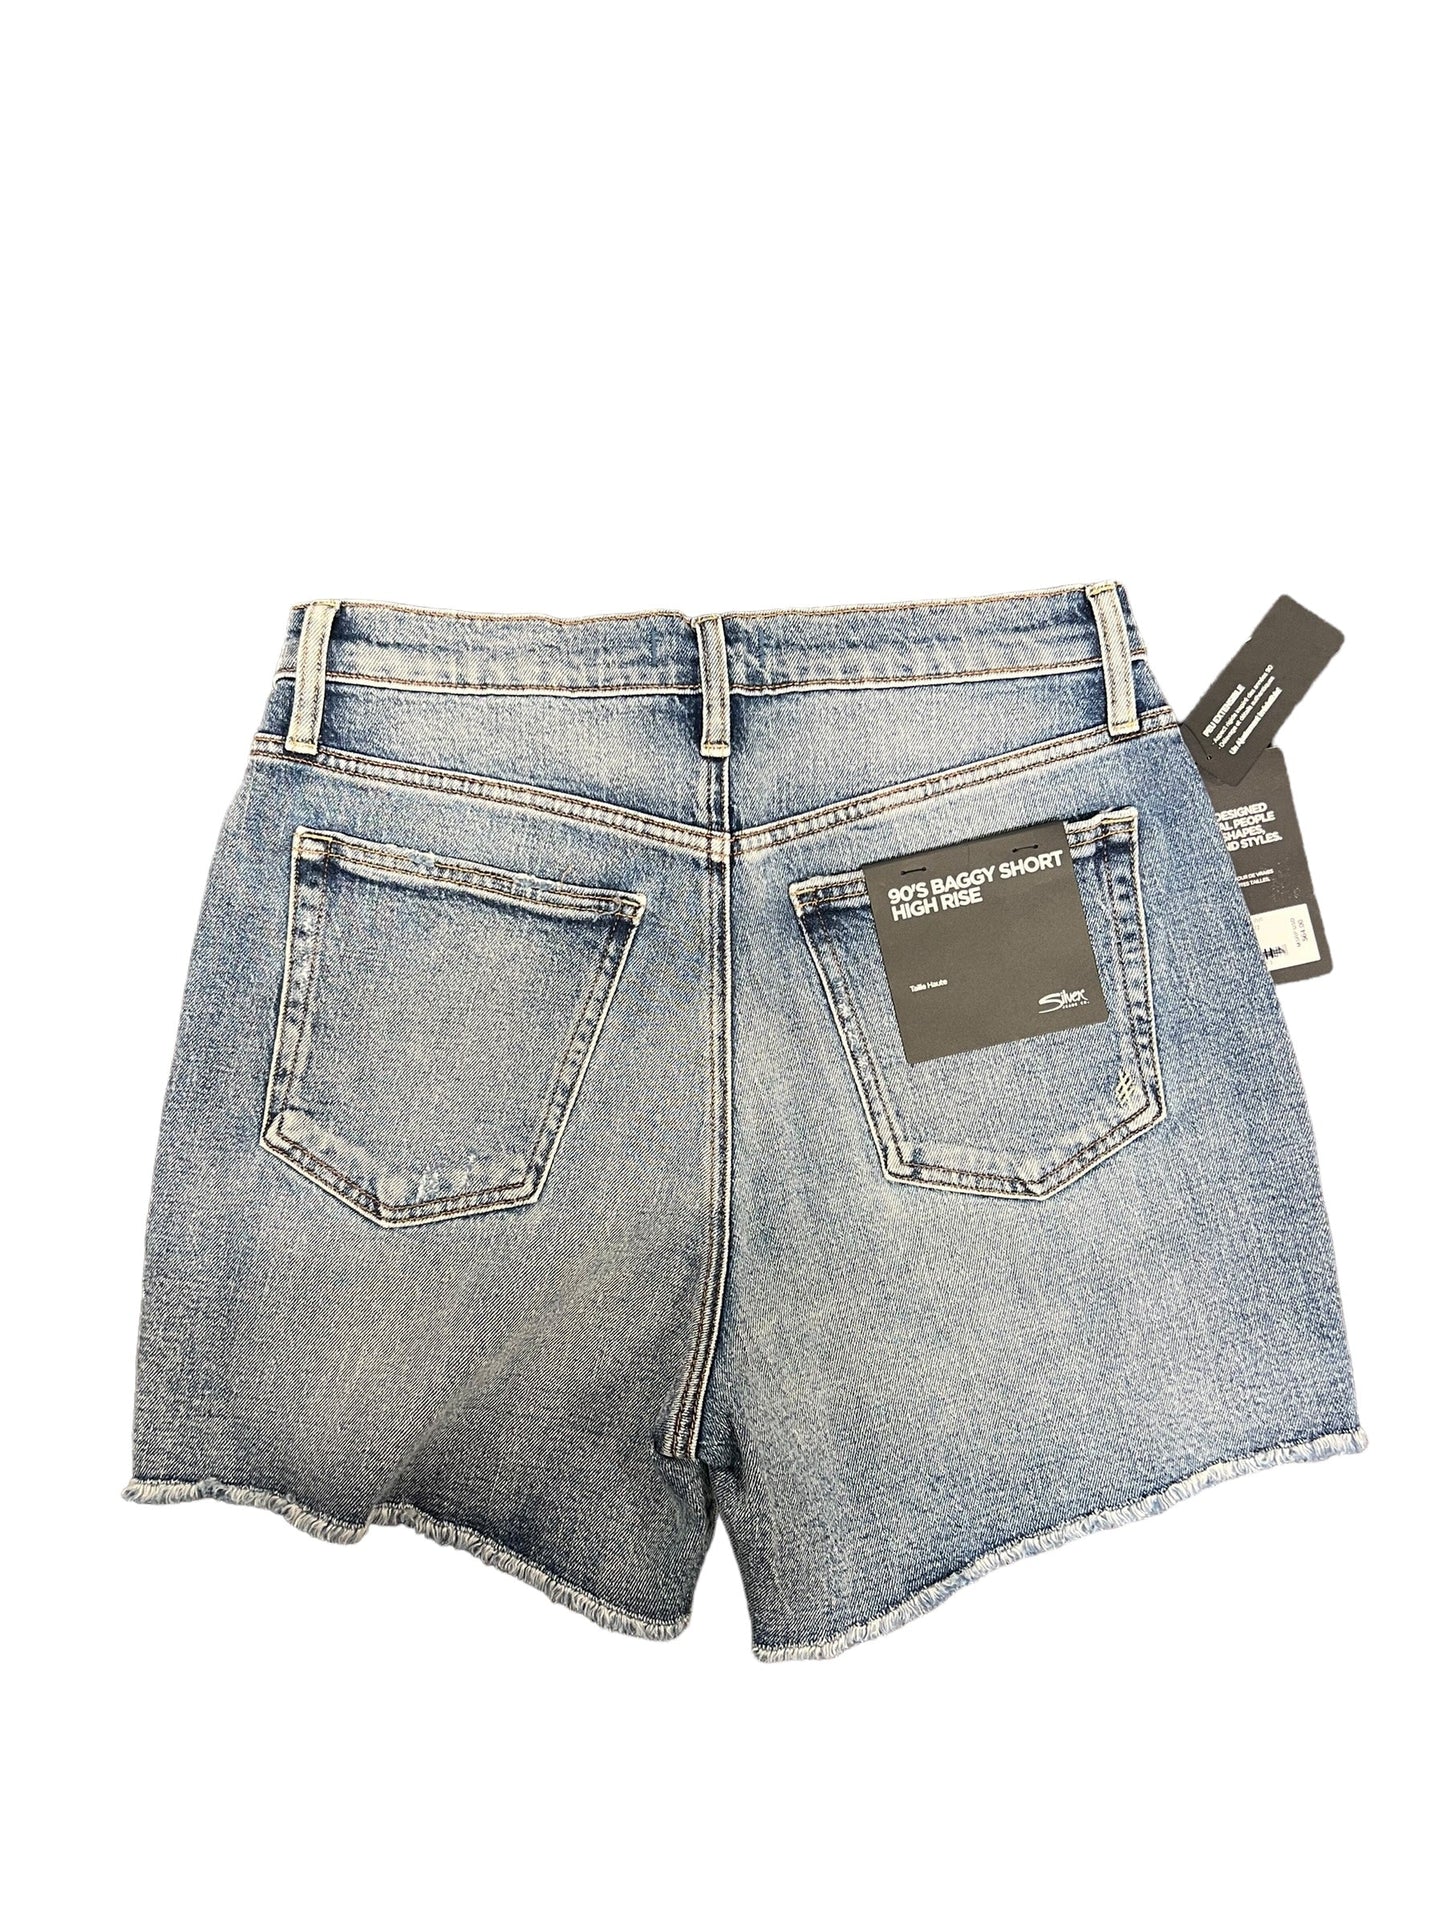 Blue Denim Shorts Silver, Size 4